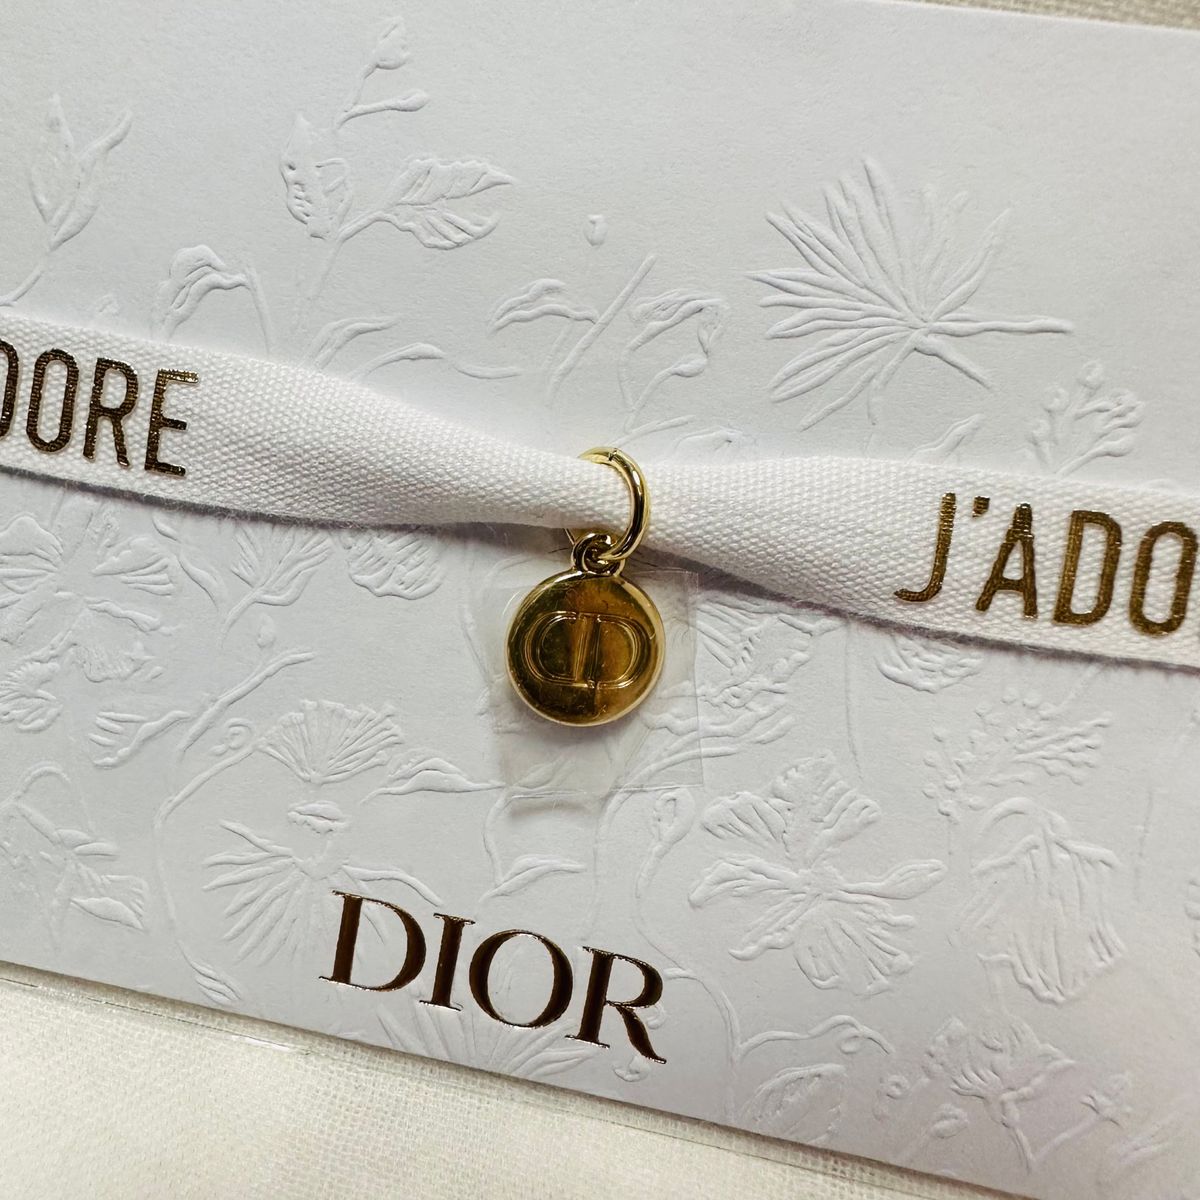 Christian Dior ディオール ノベルティ ジャドール ブレスレット リボン 新品未使用♪